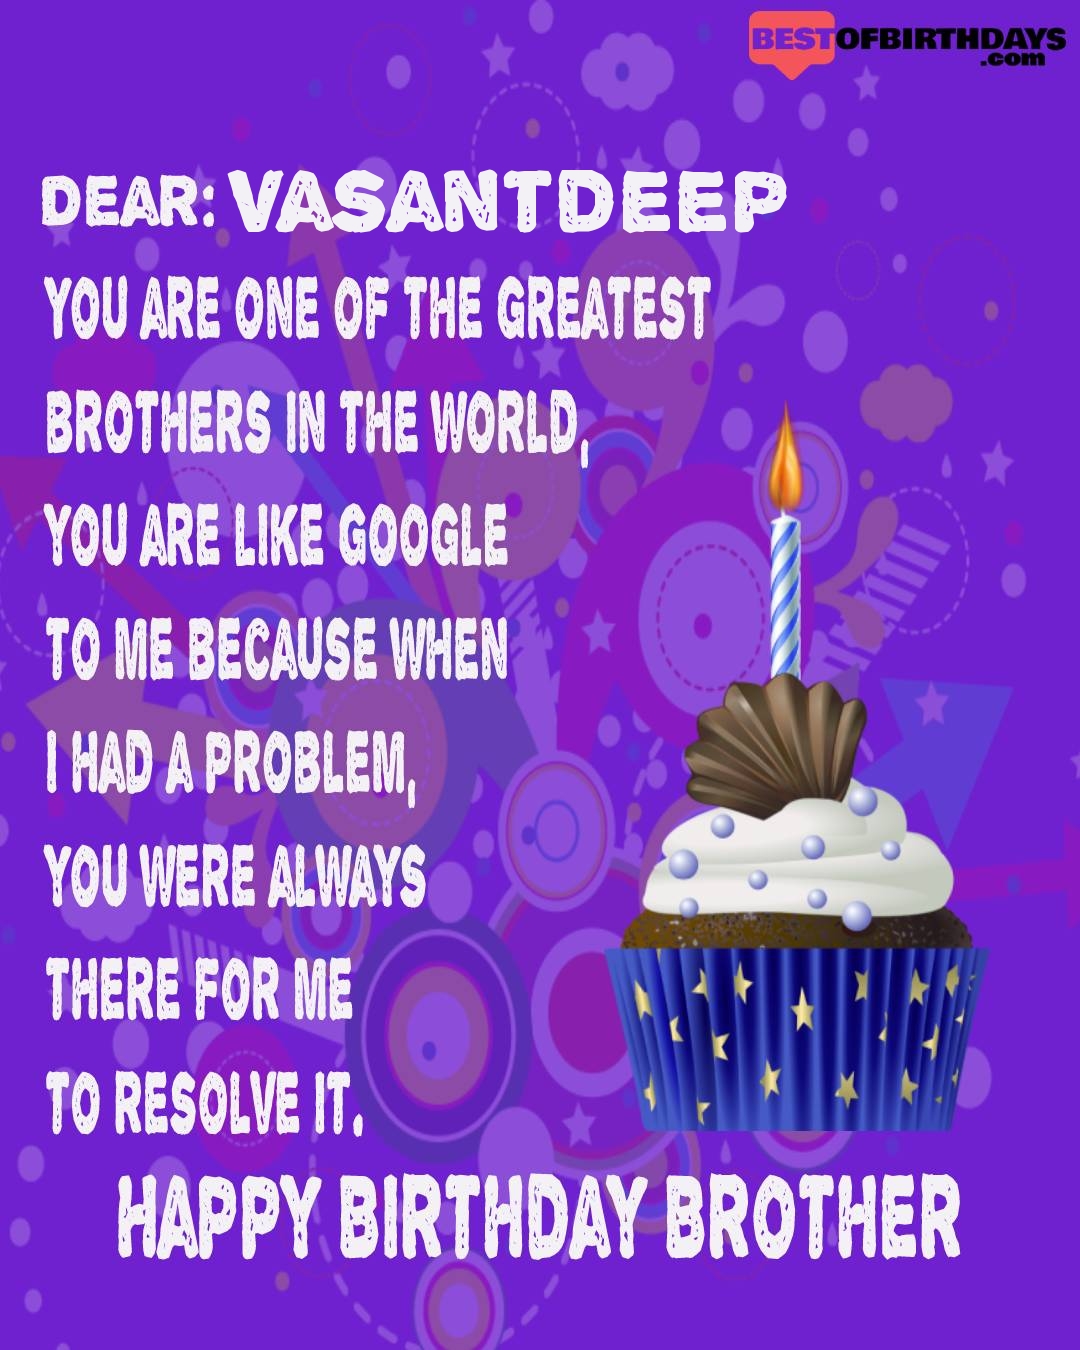 Happy birthday vasantdeep bhai brother bro